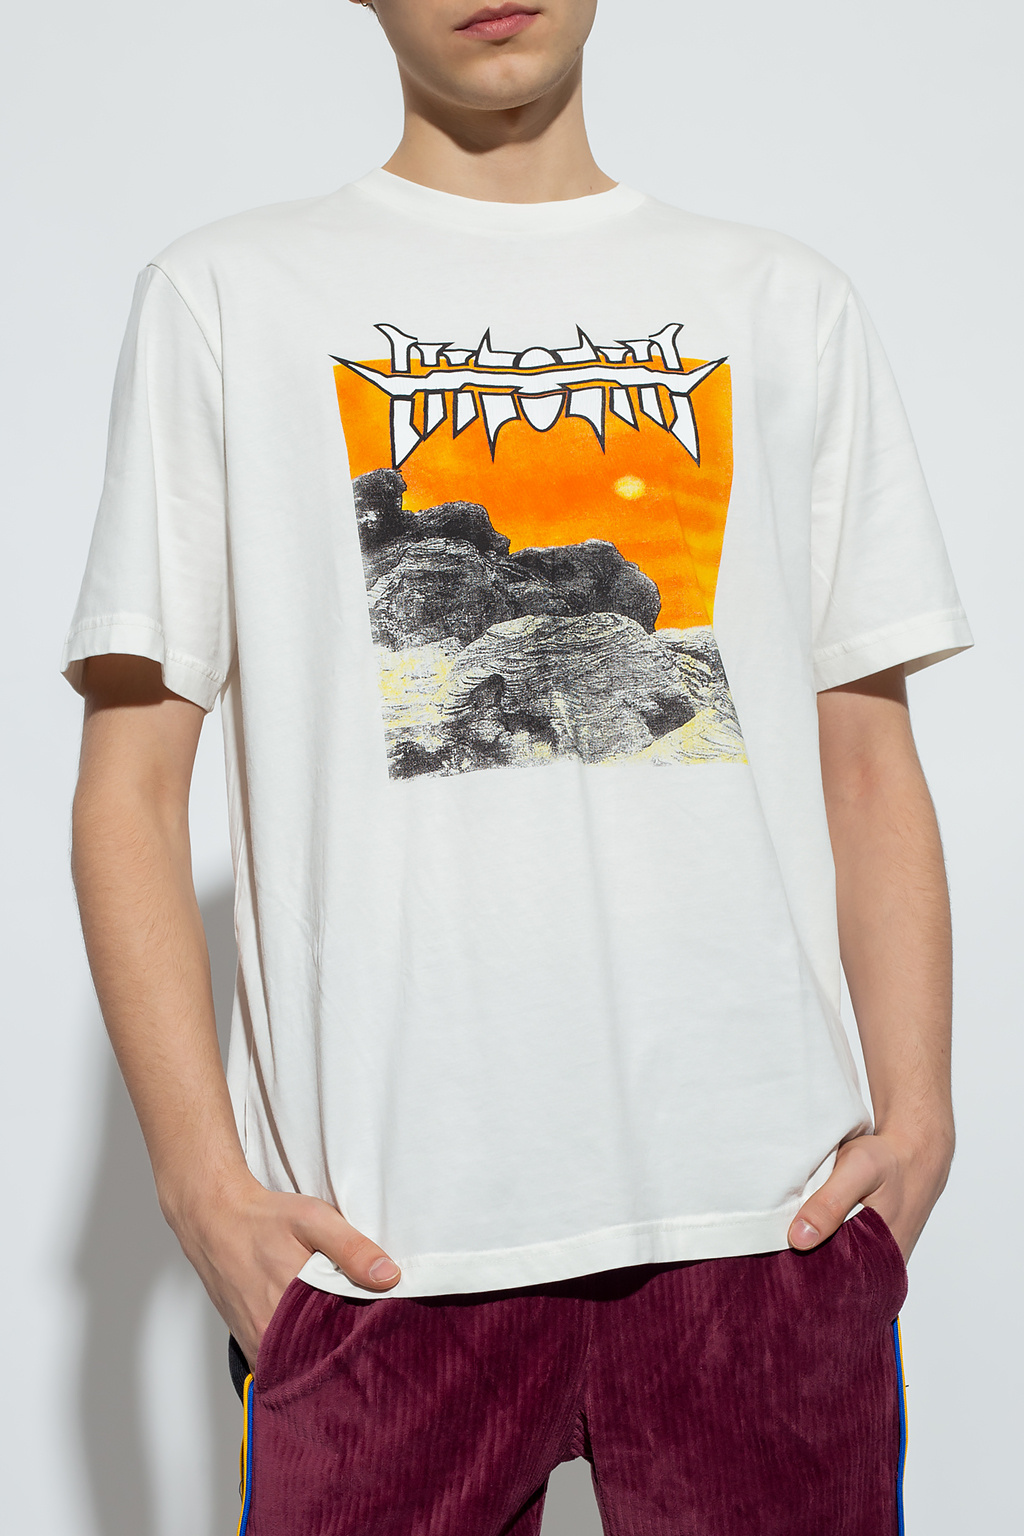 StclaircomoShops | Diesel \'T - Men\'s Clothing - Just\' printed T | shirt -  vsct clubwear 2 on 1 t shirt anthracite melange white